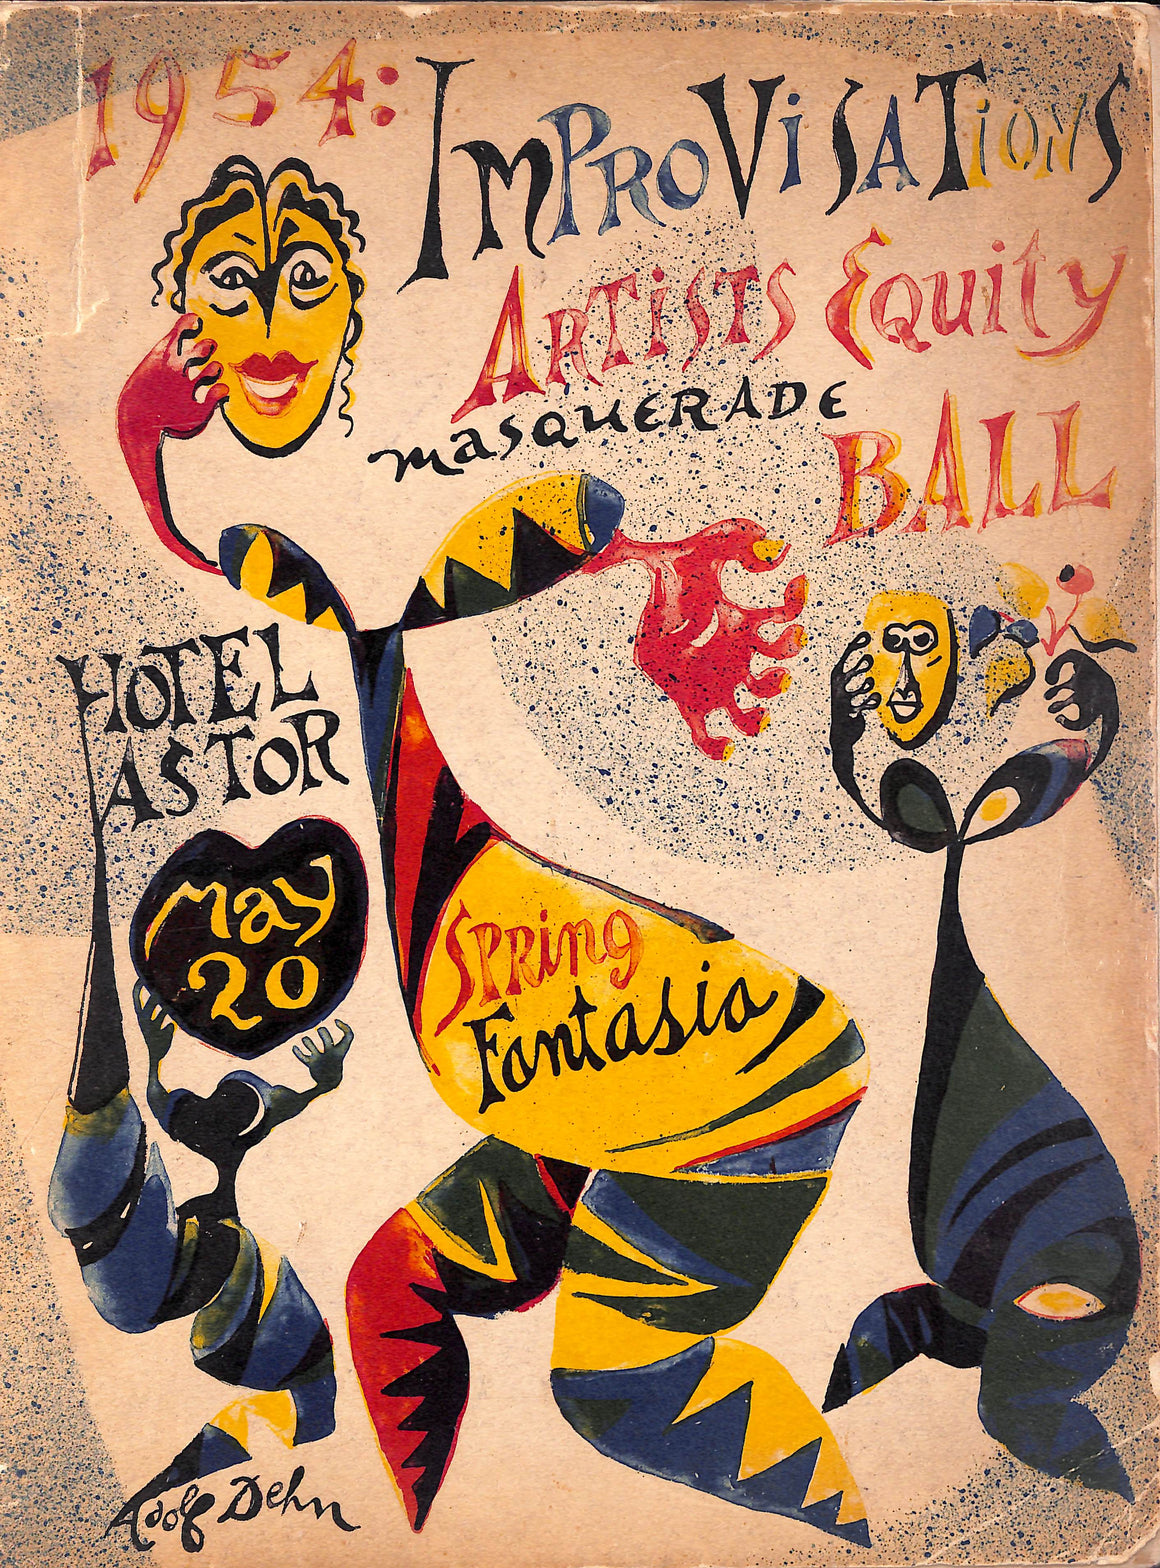 "IMPROVISATIONS 1954 : Artists Equity Spring Fantasia Masquerade Ball" GOODMAN, Bertram [editor and art director]